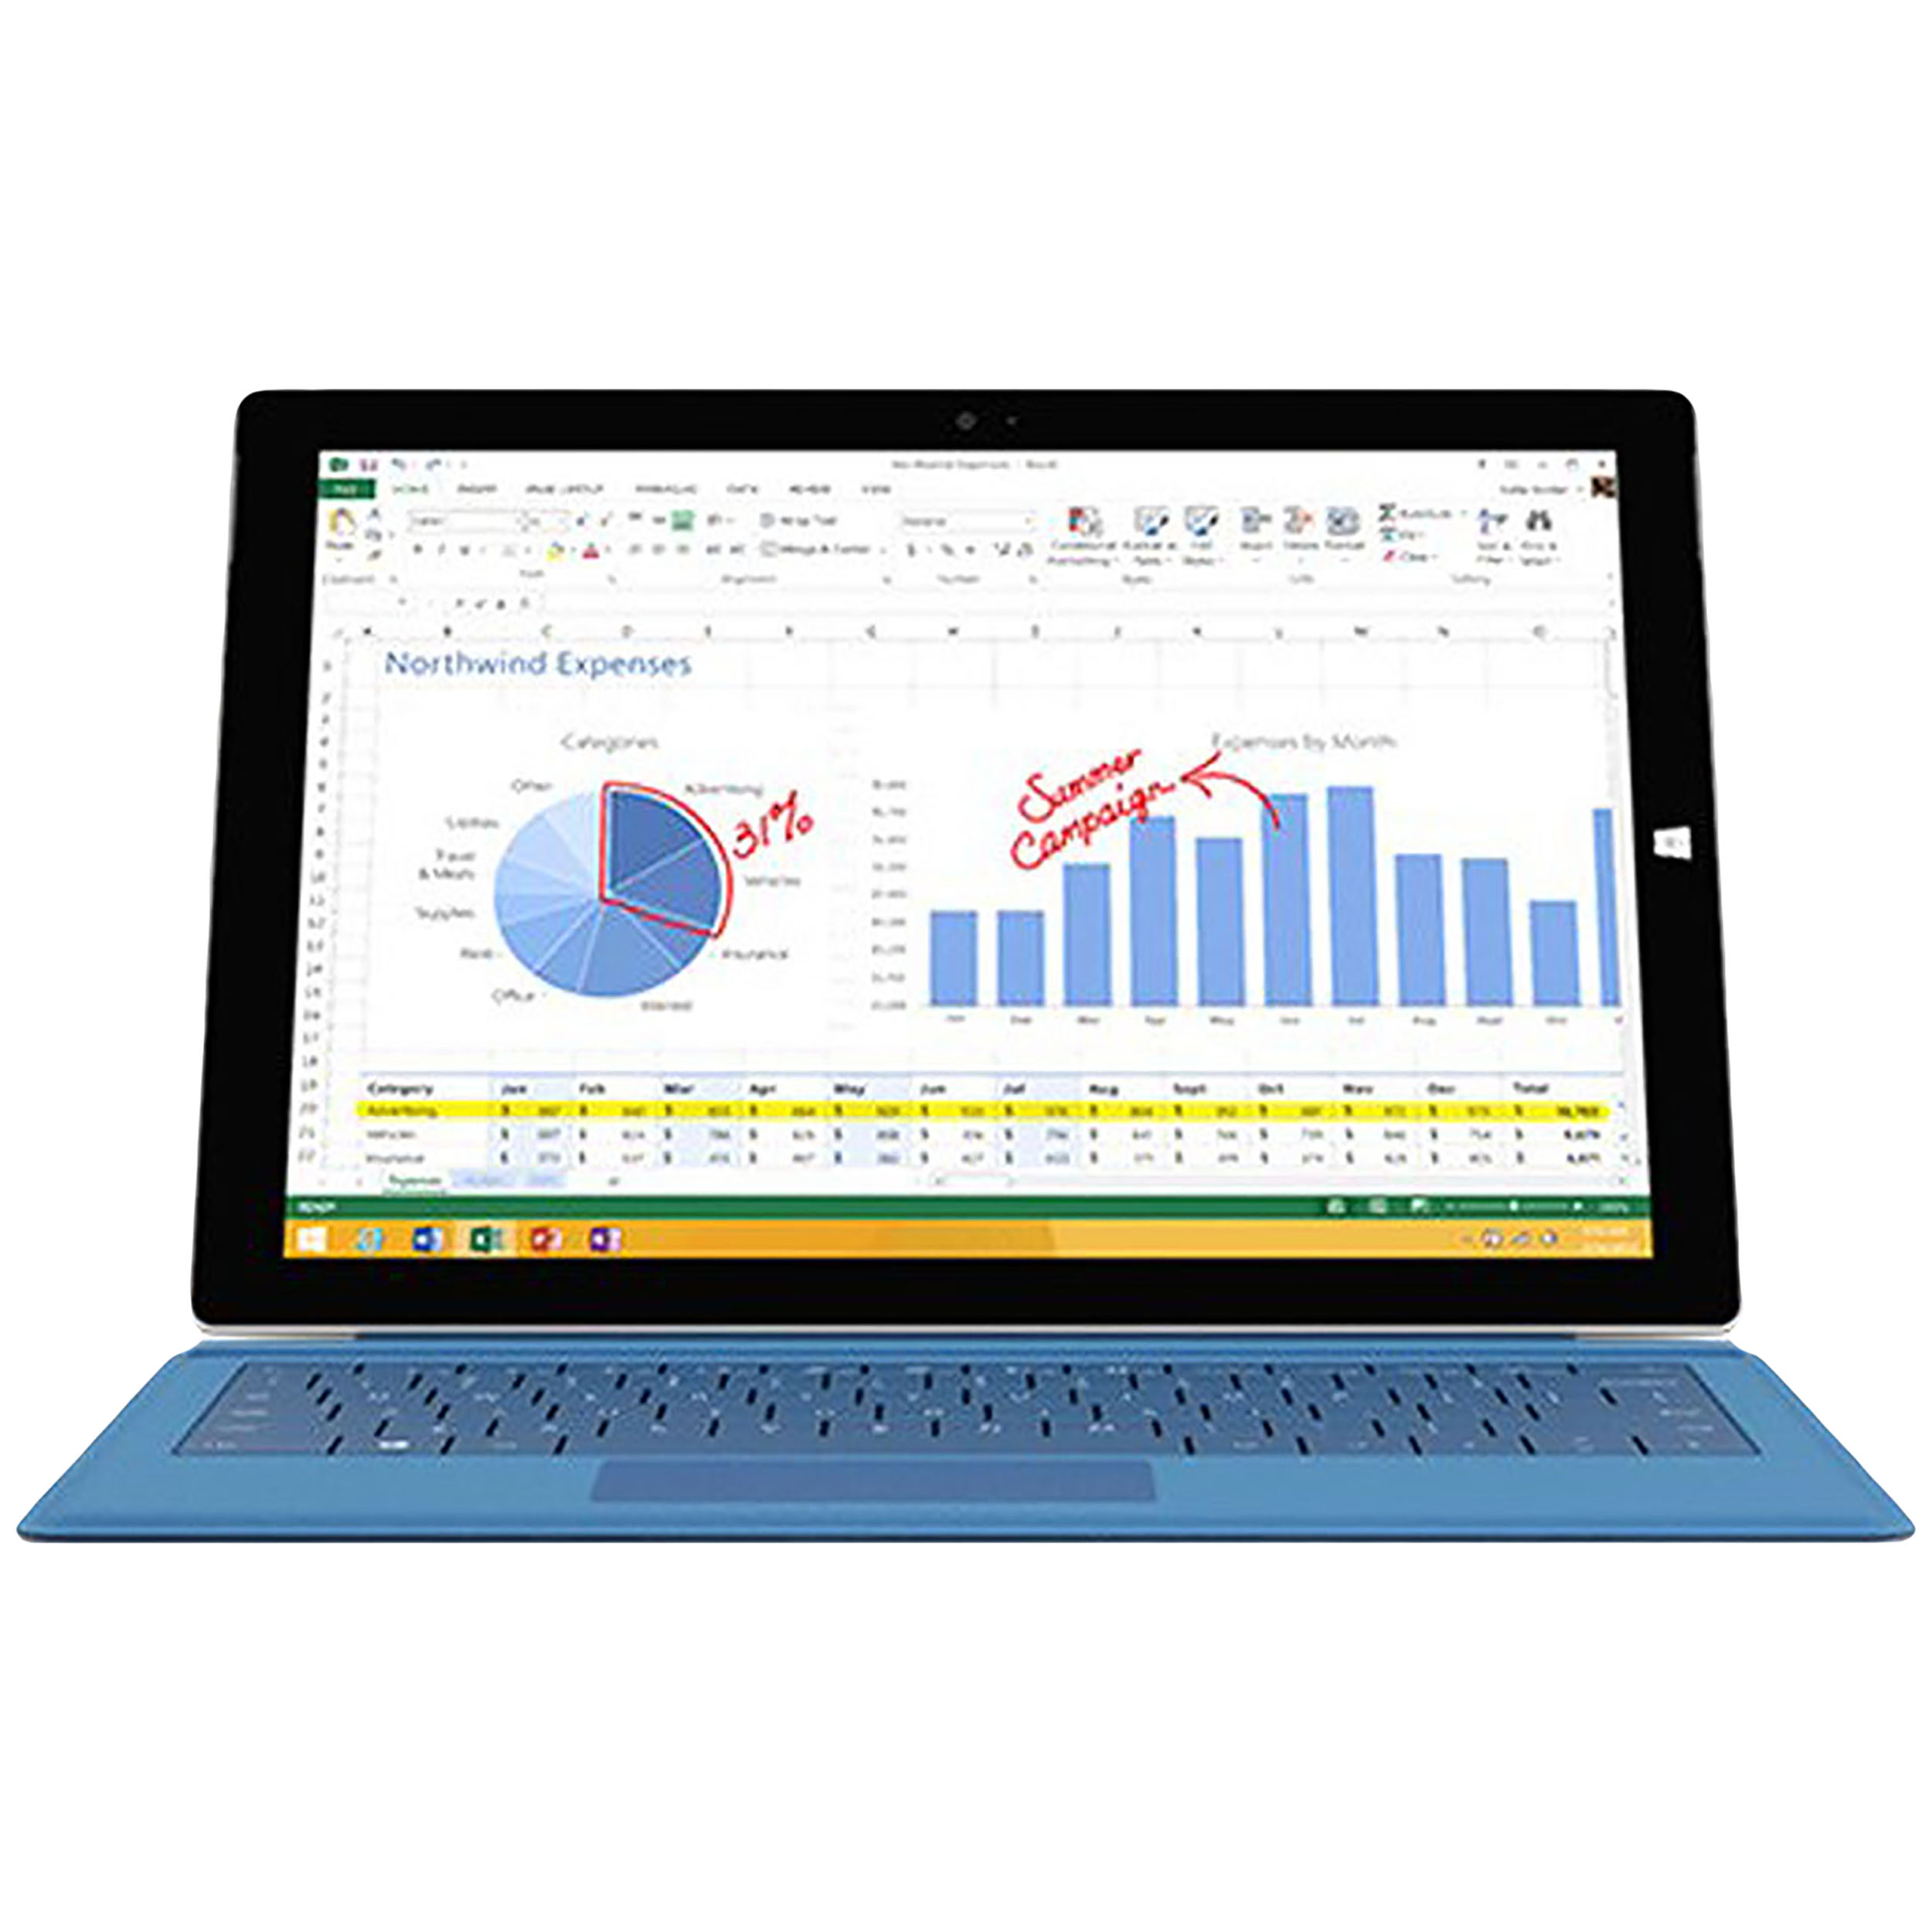 تبلت مایکروسافت مدل Surface Pro 3 - B به همراه کیبورد ظرفیت 256 گیگابایت